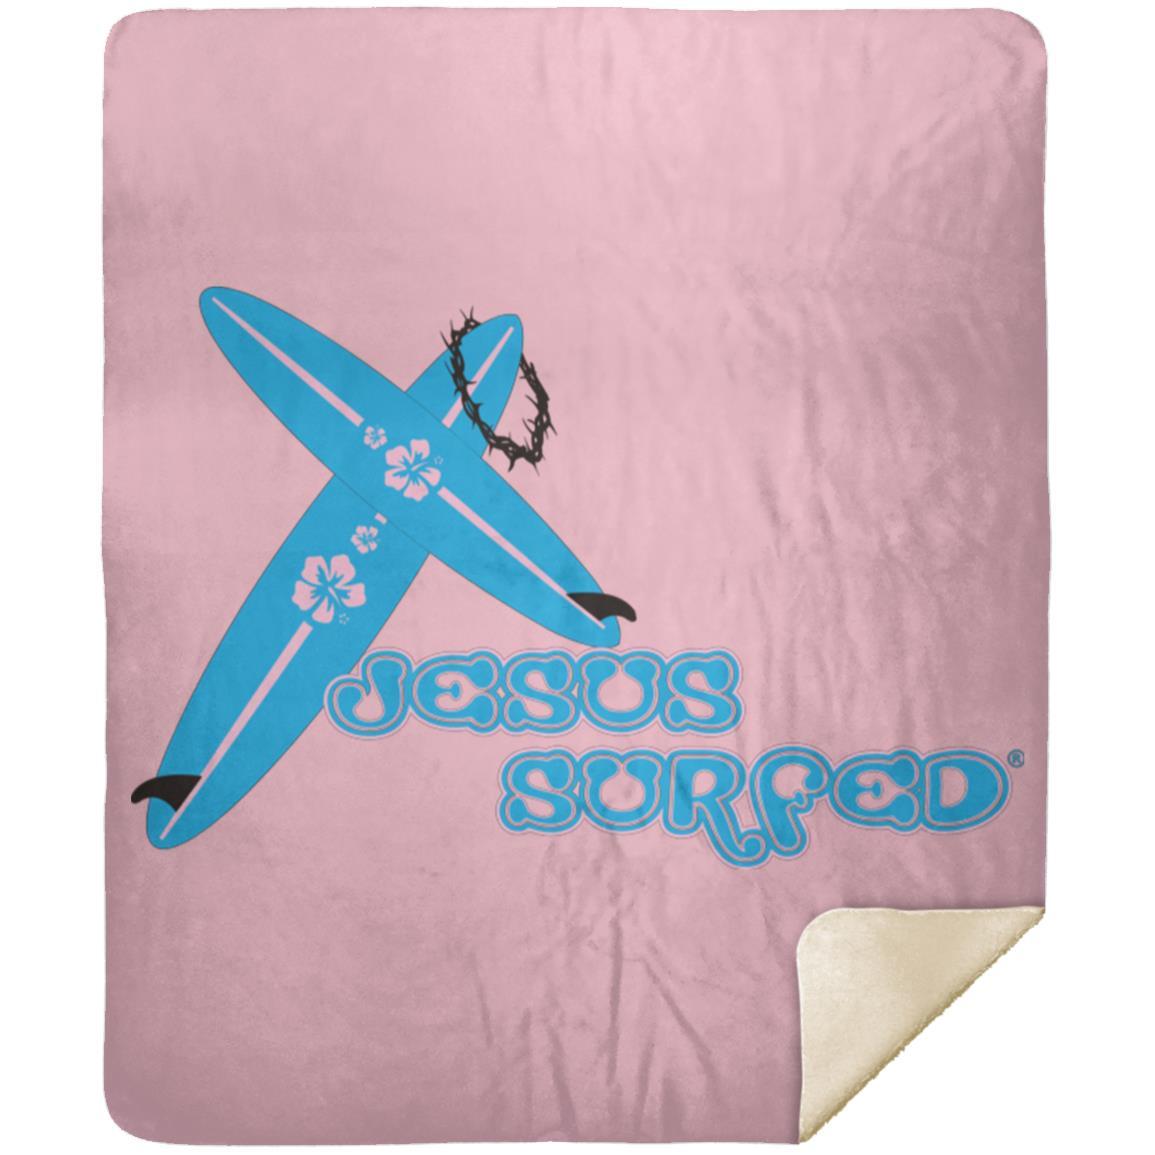 Crossboards Premium Mink Sherpa Blanket 50x60